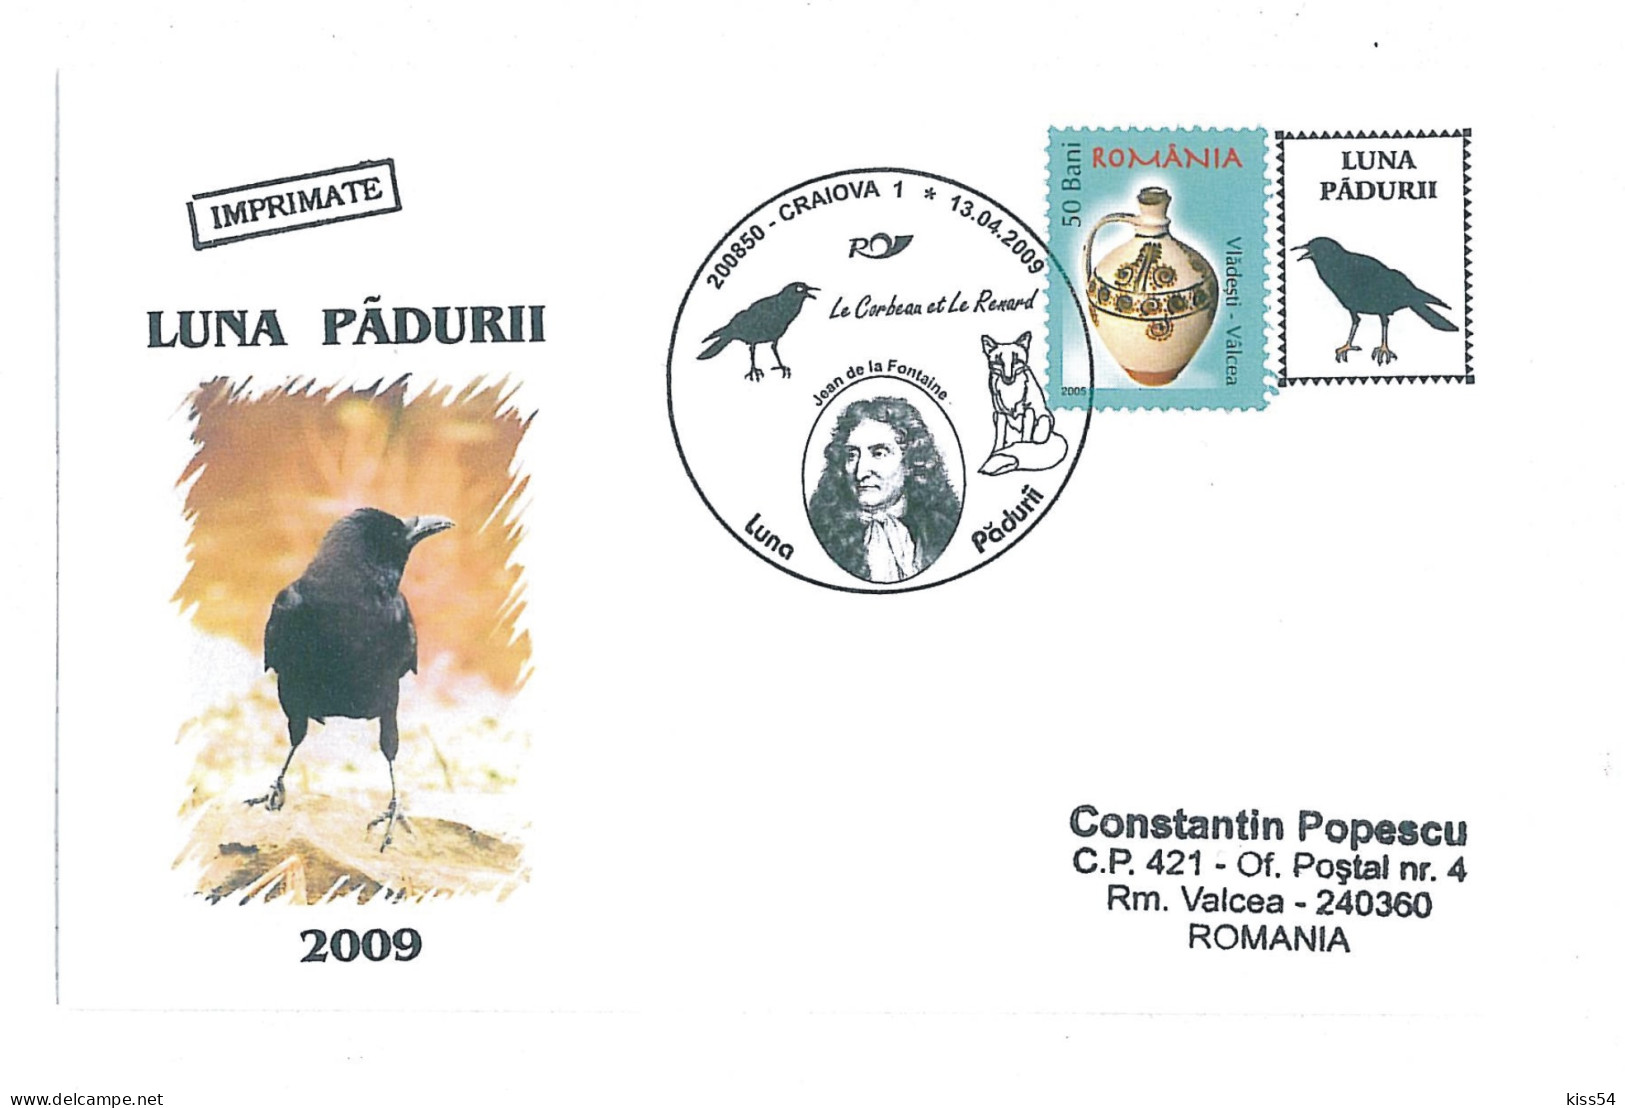 COV 22 - 535 La FONTAINE, RAVEN, Le CORBEAU Et Le Renard, Romania - Cover - Used - 2009 - Cartes-maximum (CM)